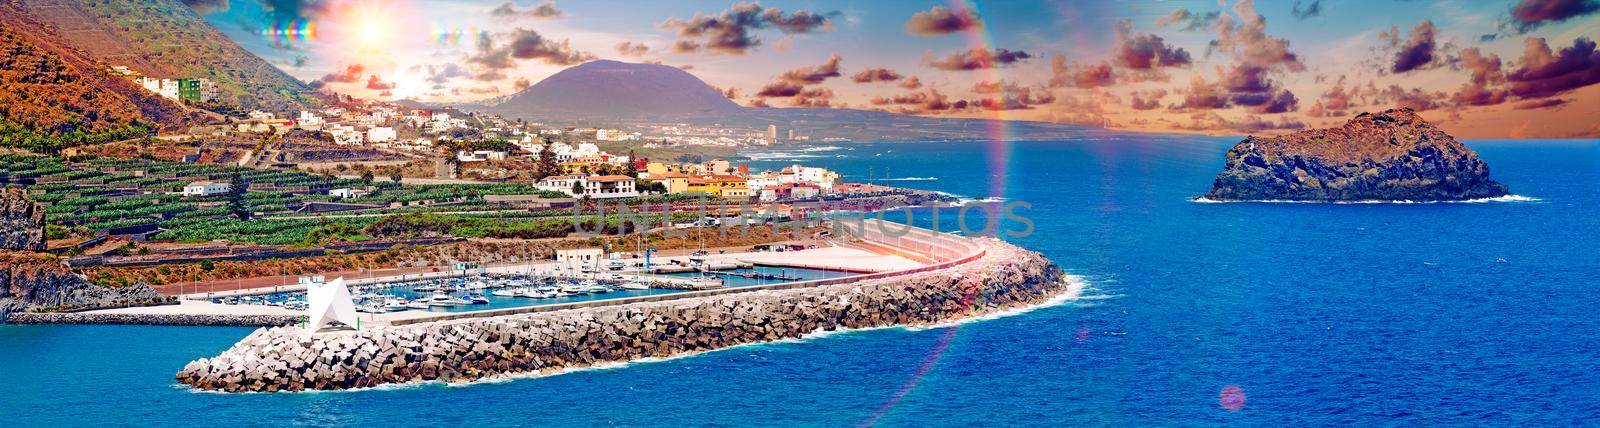 Tenerife island scenery.Ocean and beautiful stone,Garachico beach by carloscastilla